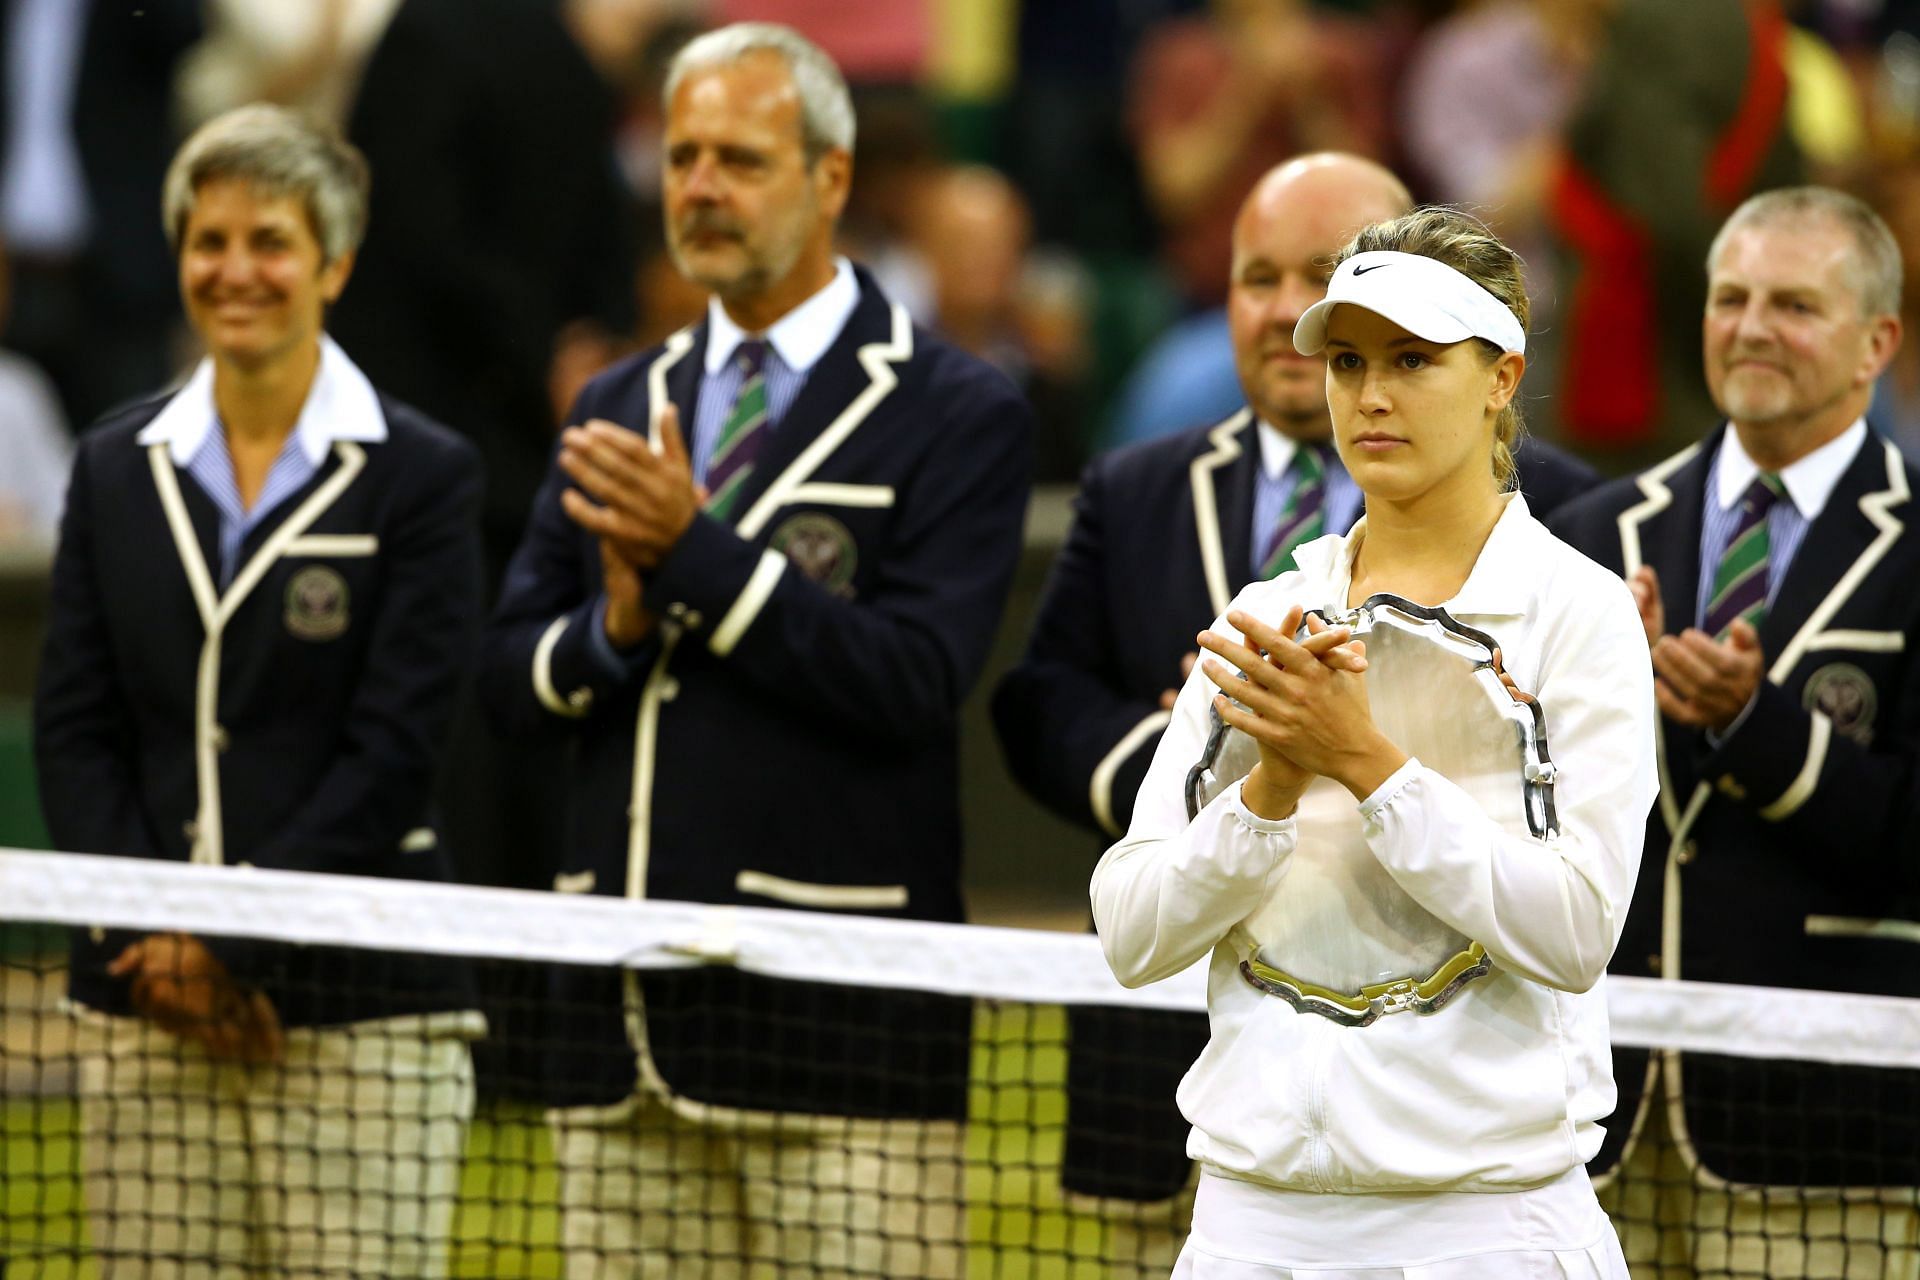 Eugenie Bouchard was the 2014 Wimbledon runner-up